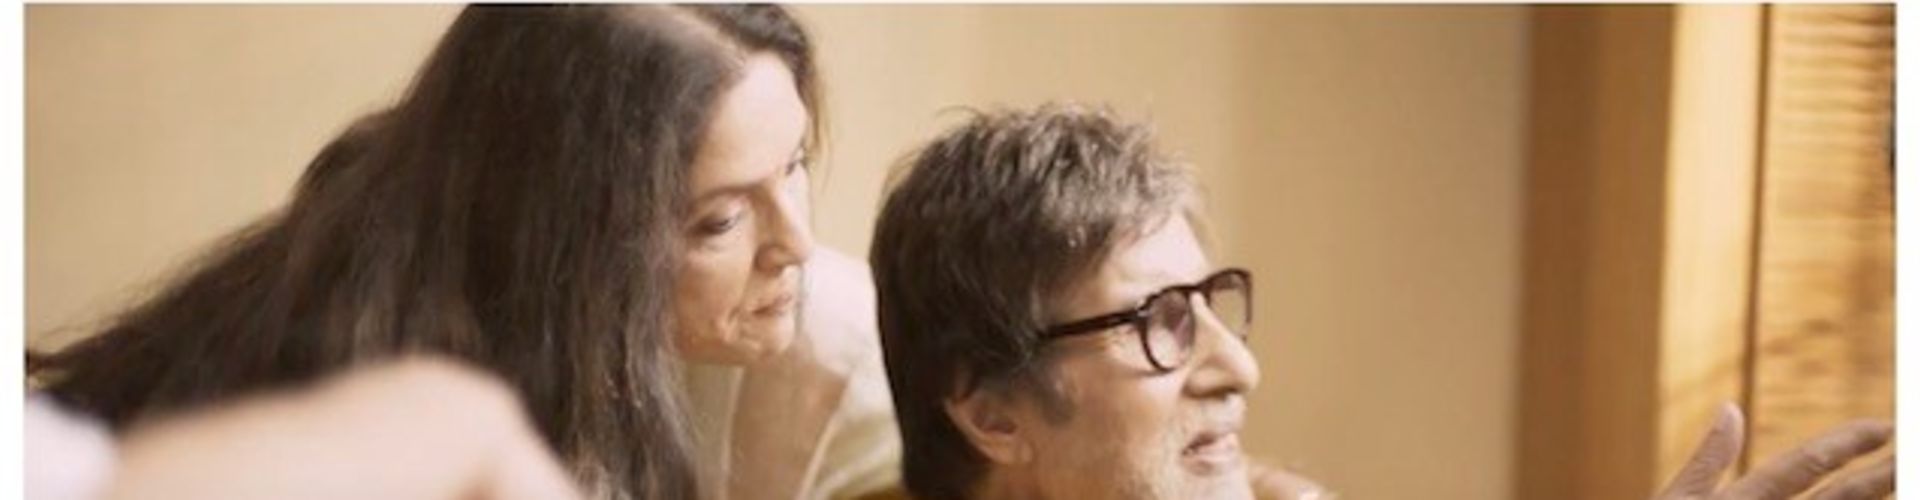 Good Bye Trailer Is Out, Starring Amitabh Bachchan And Rashmika Mandanna